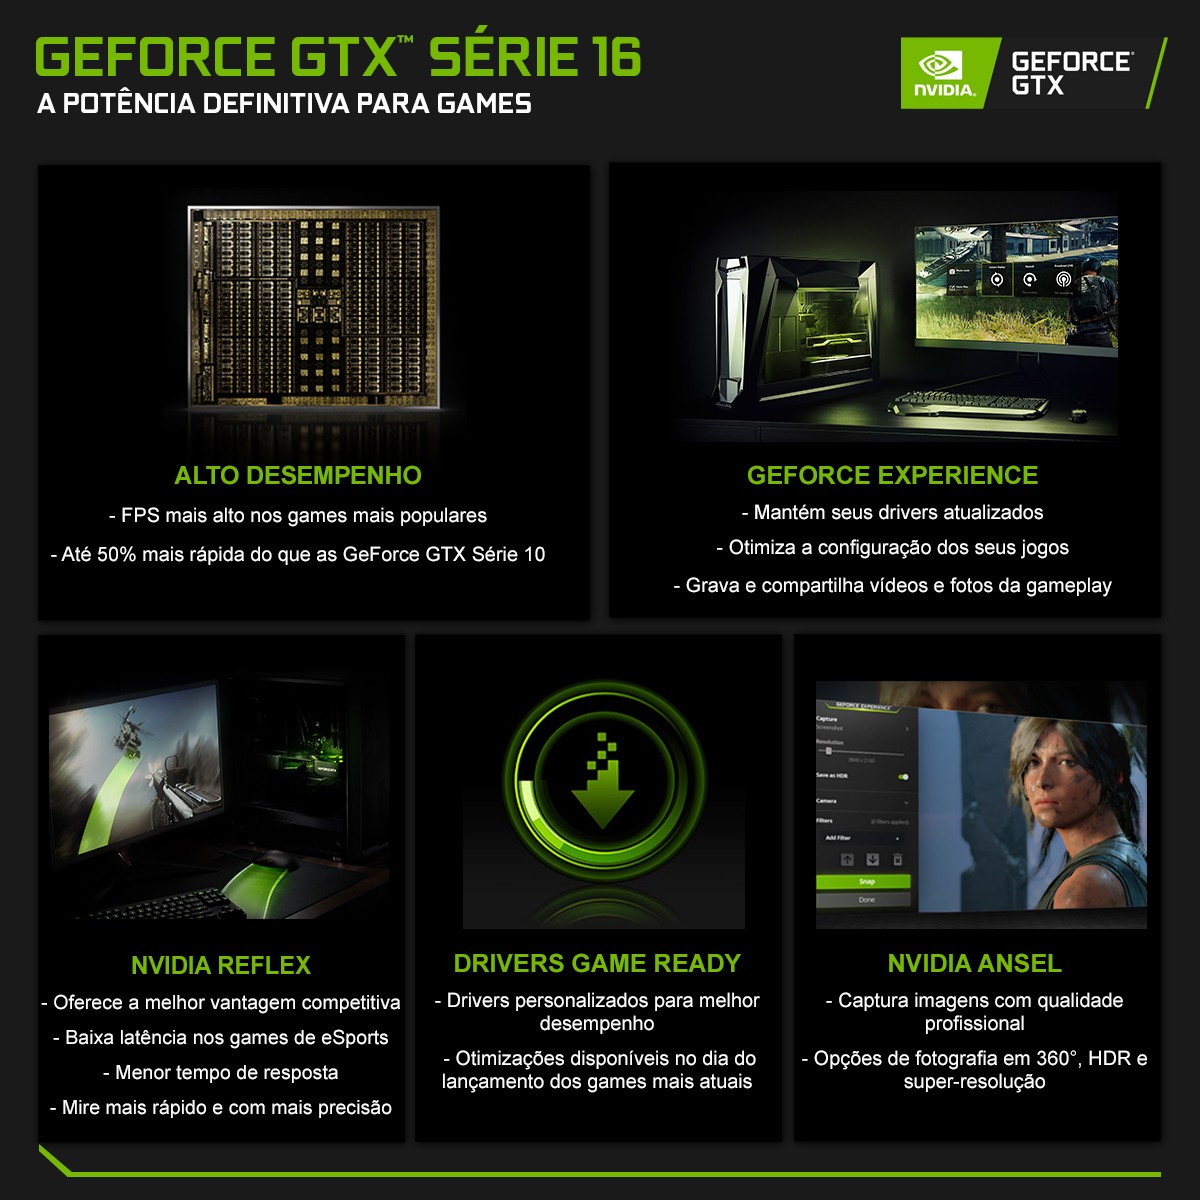 Placa de Video Gigabyte GeForce GTX 1660 Super OC 6G Dual, 6GB GDDR6, 192Bit, GV-N166SOC-6GD